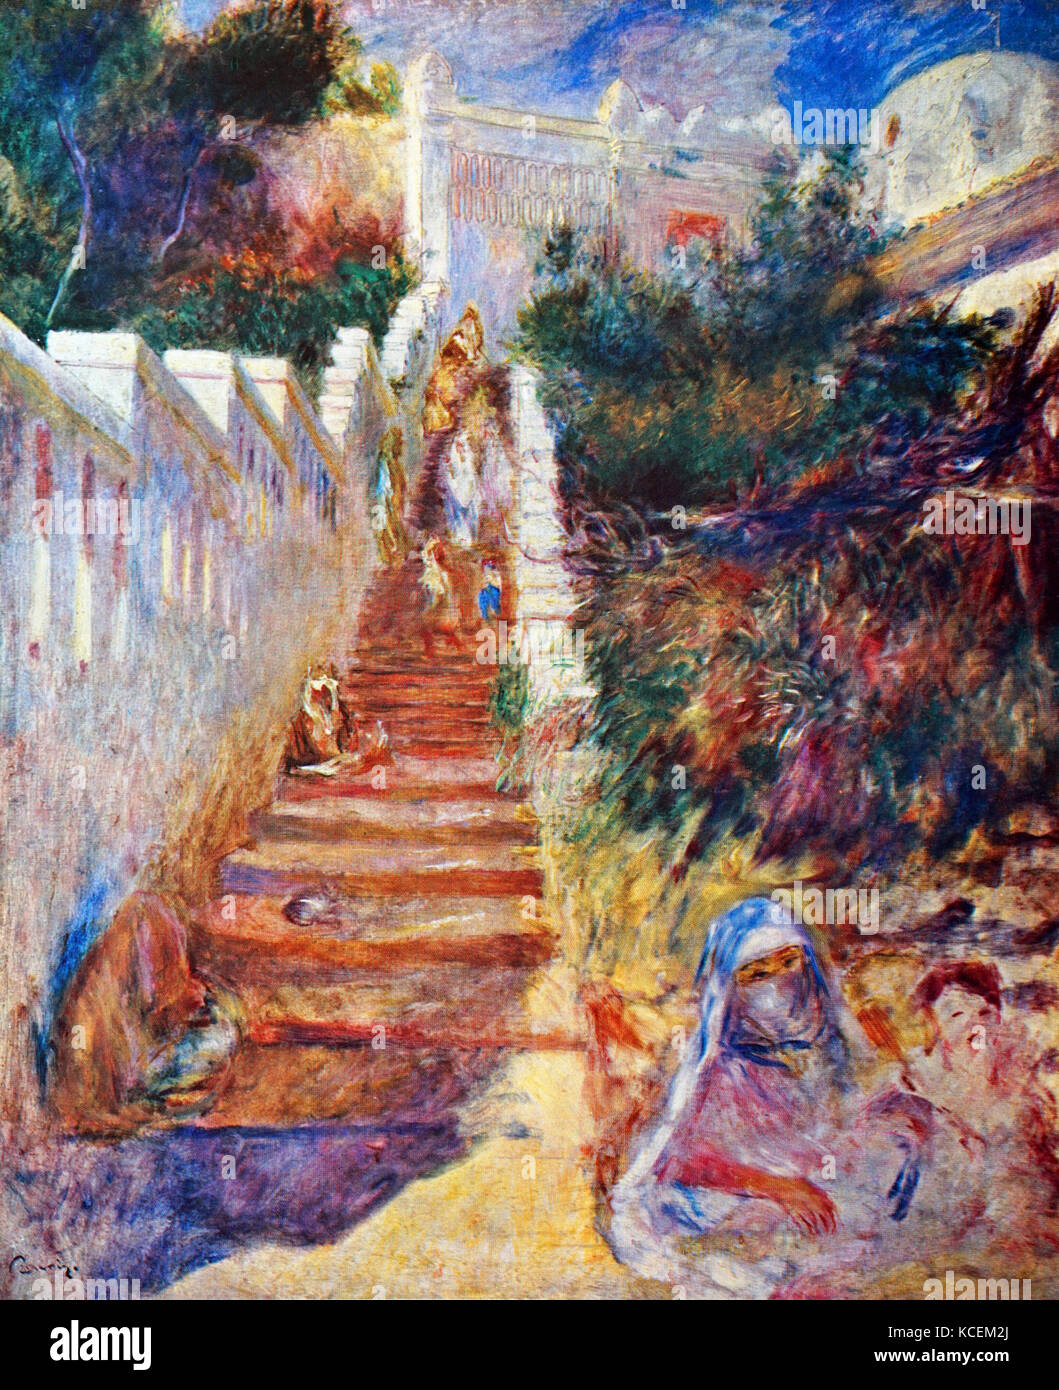 Pintura titulada "La Escalera, Argel' de Pierre-Auguste Renoir (1841-1919), un artista francés del estilo impresionista. Fecha del siglo XIX Foto de stock